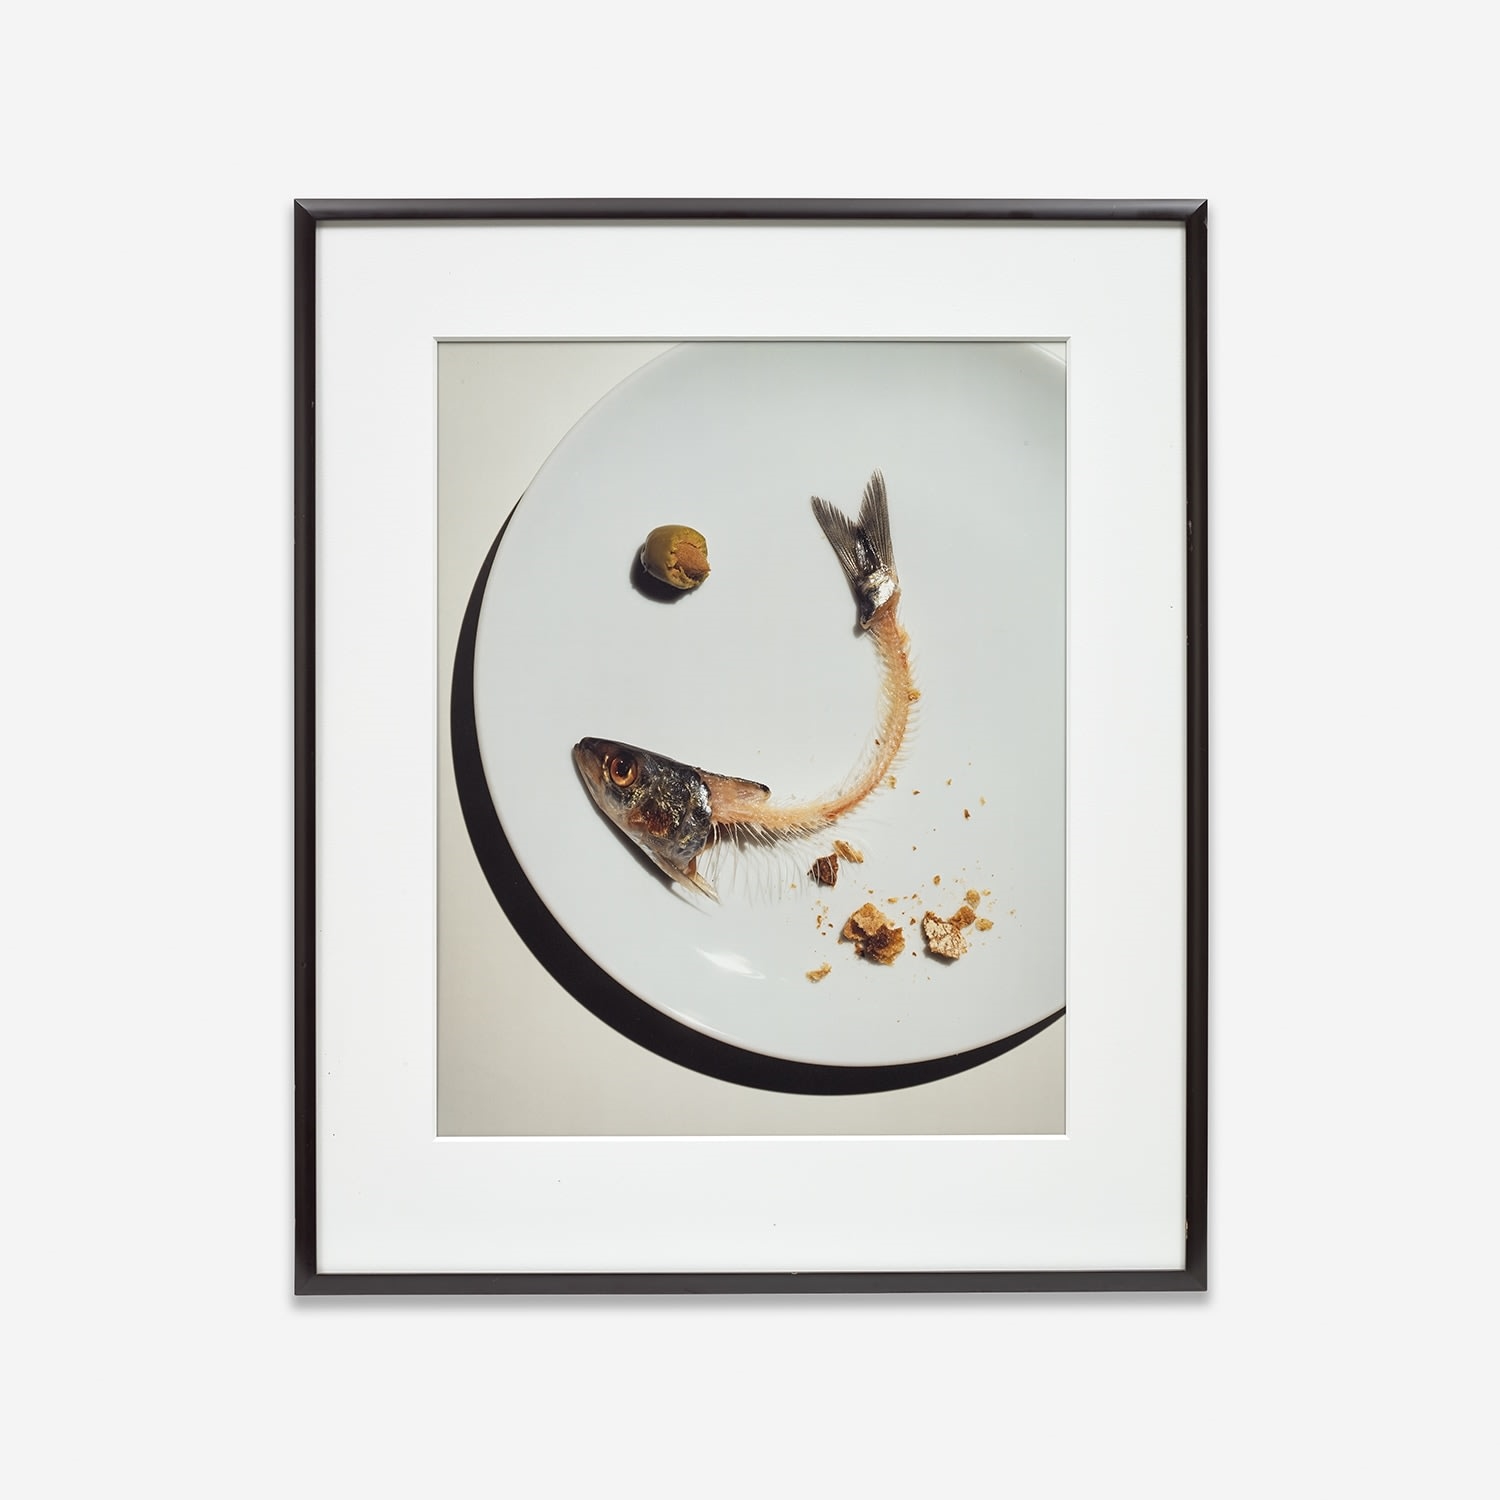 Irving Penn, Fish Bones on a Plate, New York (1993)